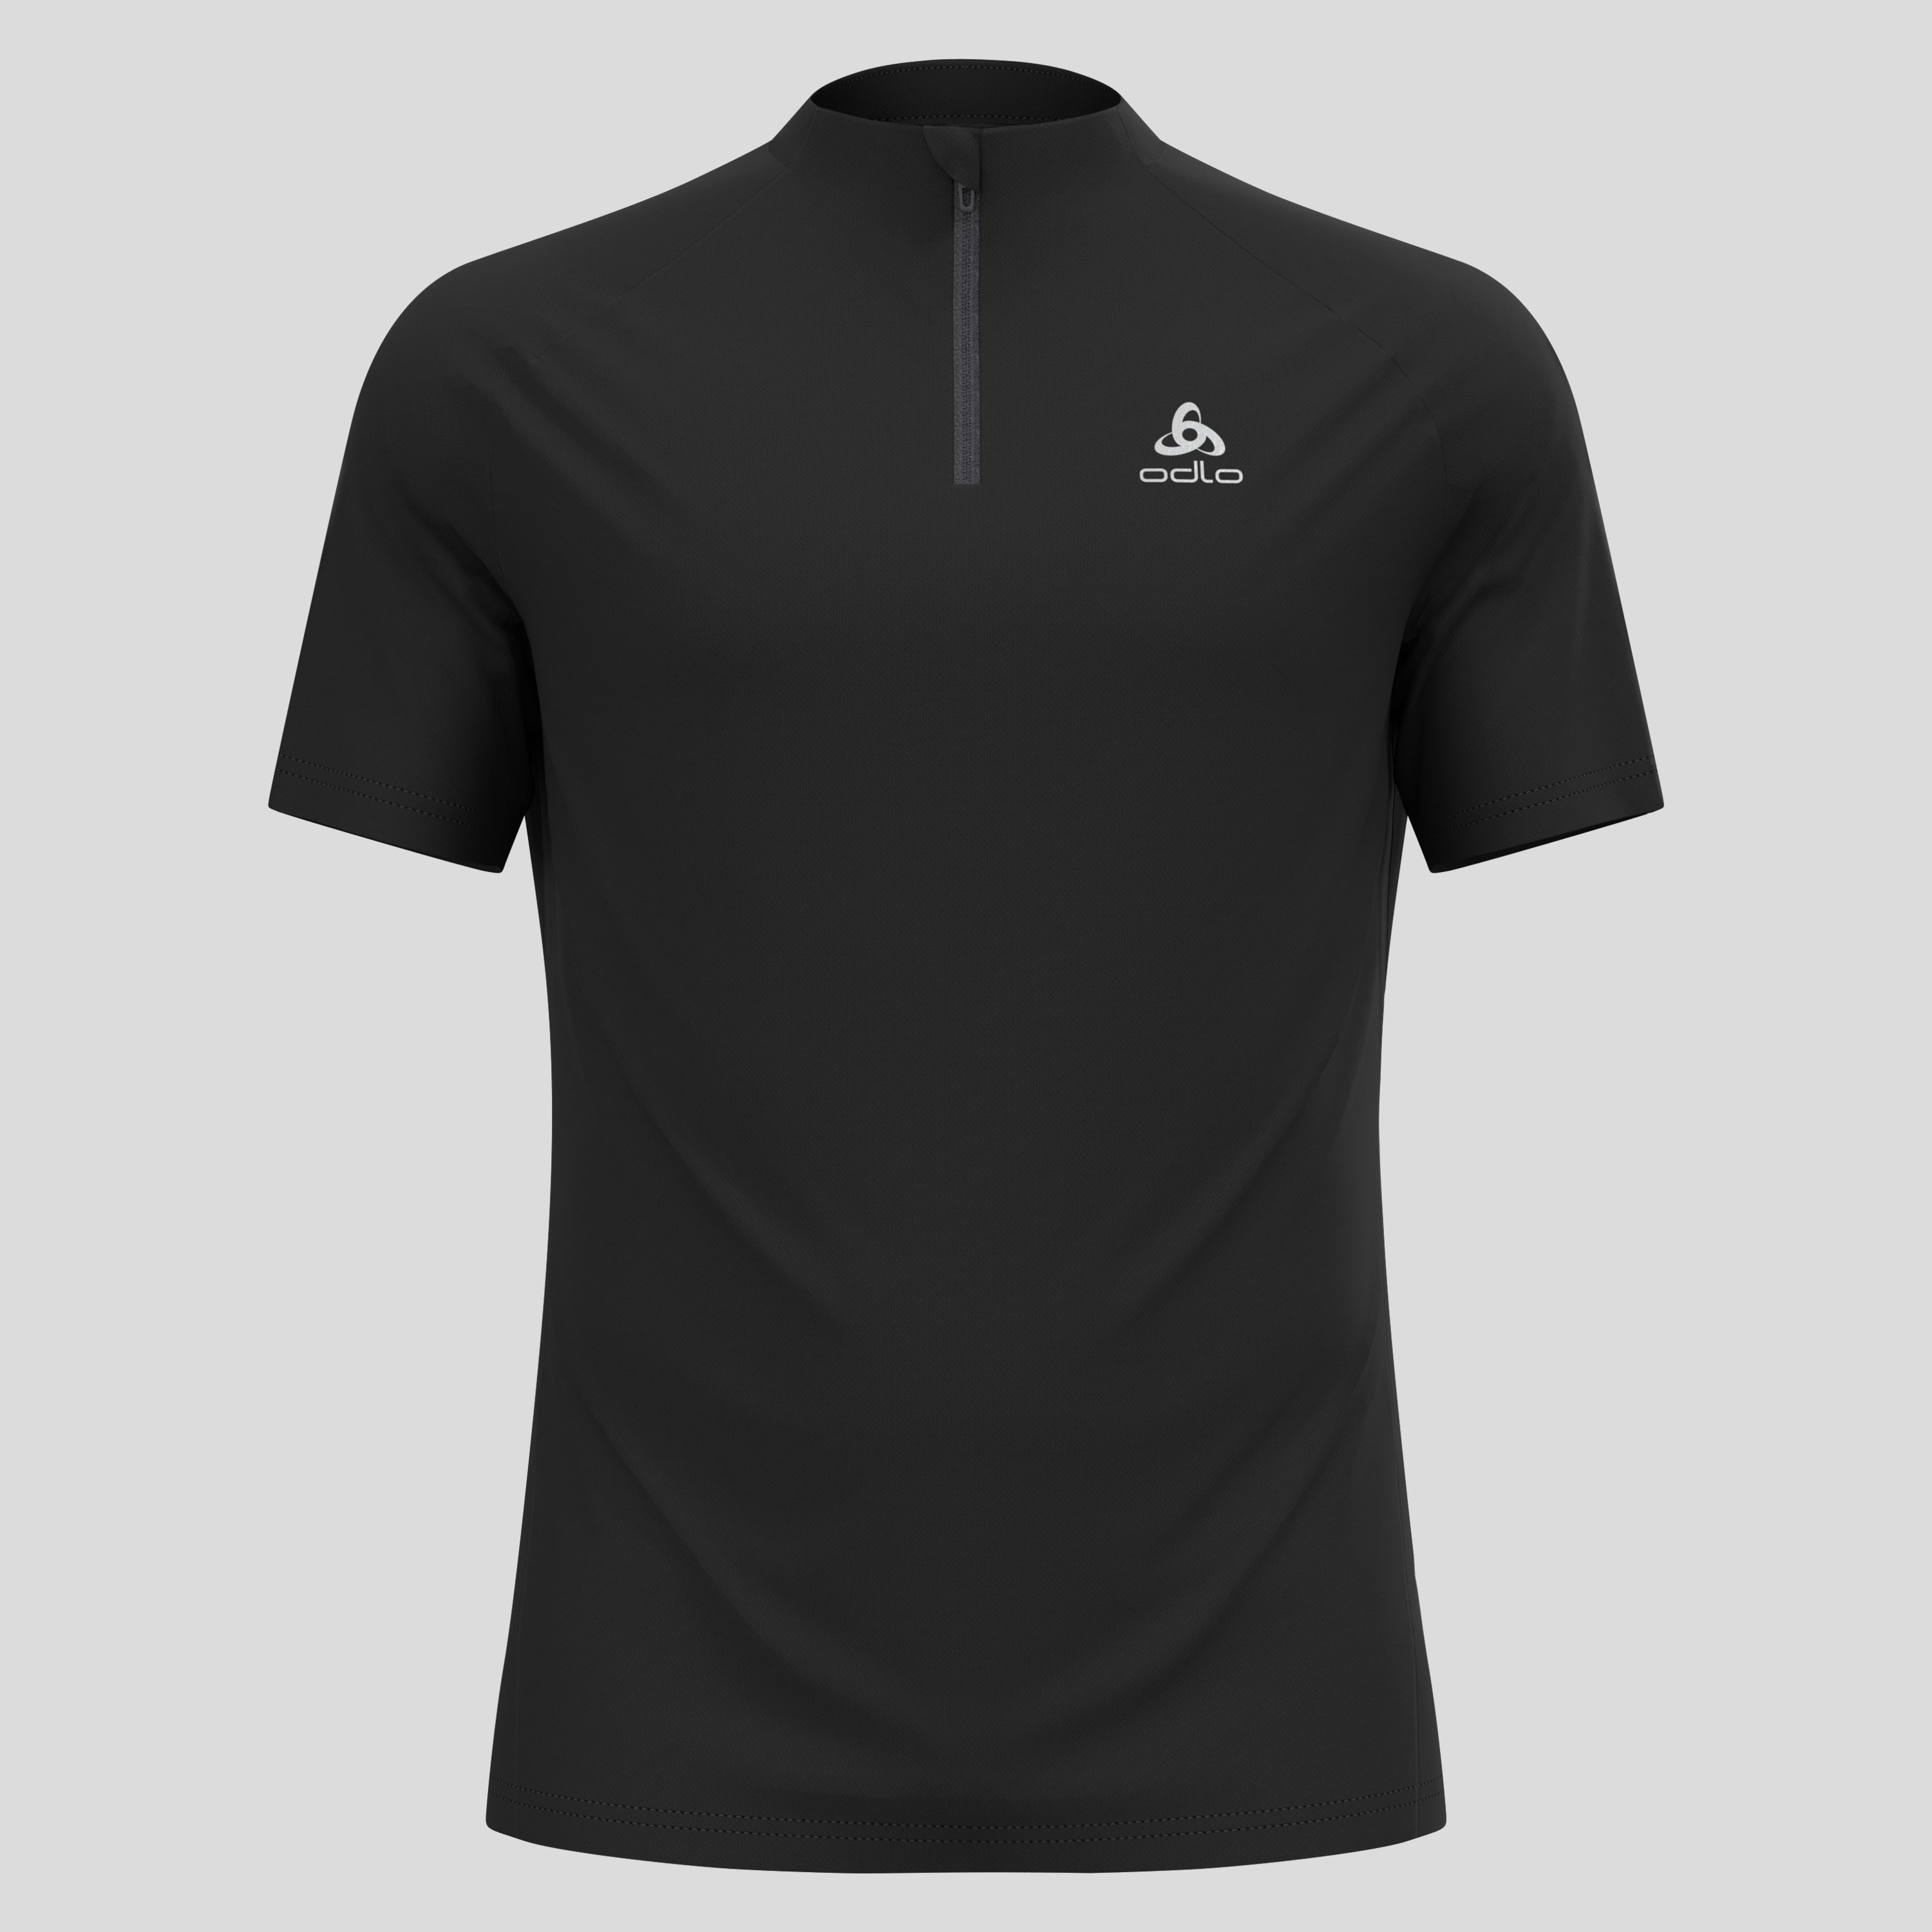 Odlo T-shirt de trail running Essentials pour homme, XXL, noir